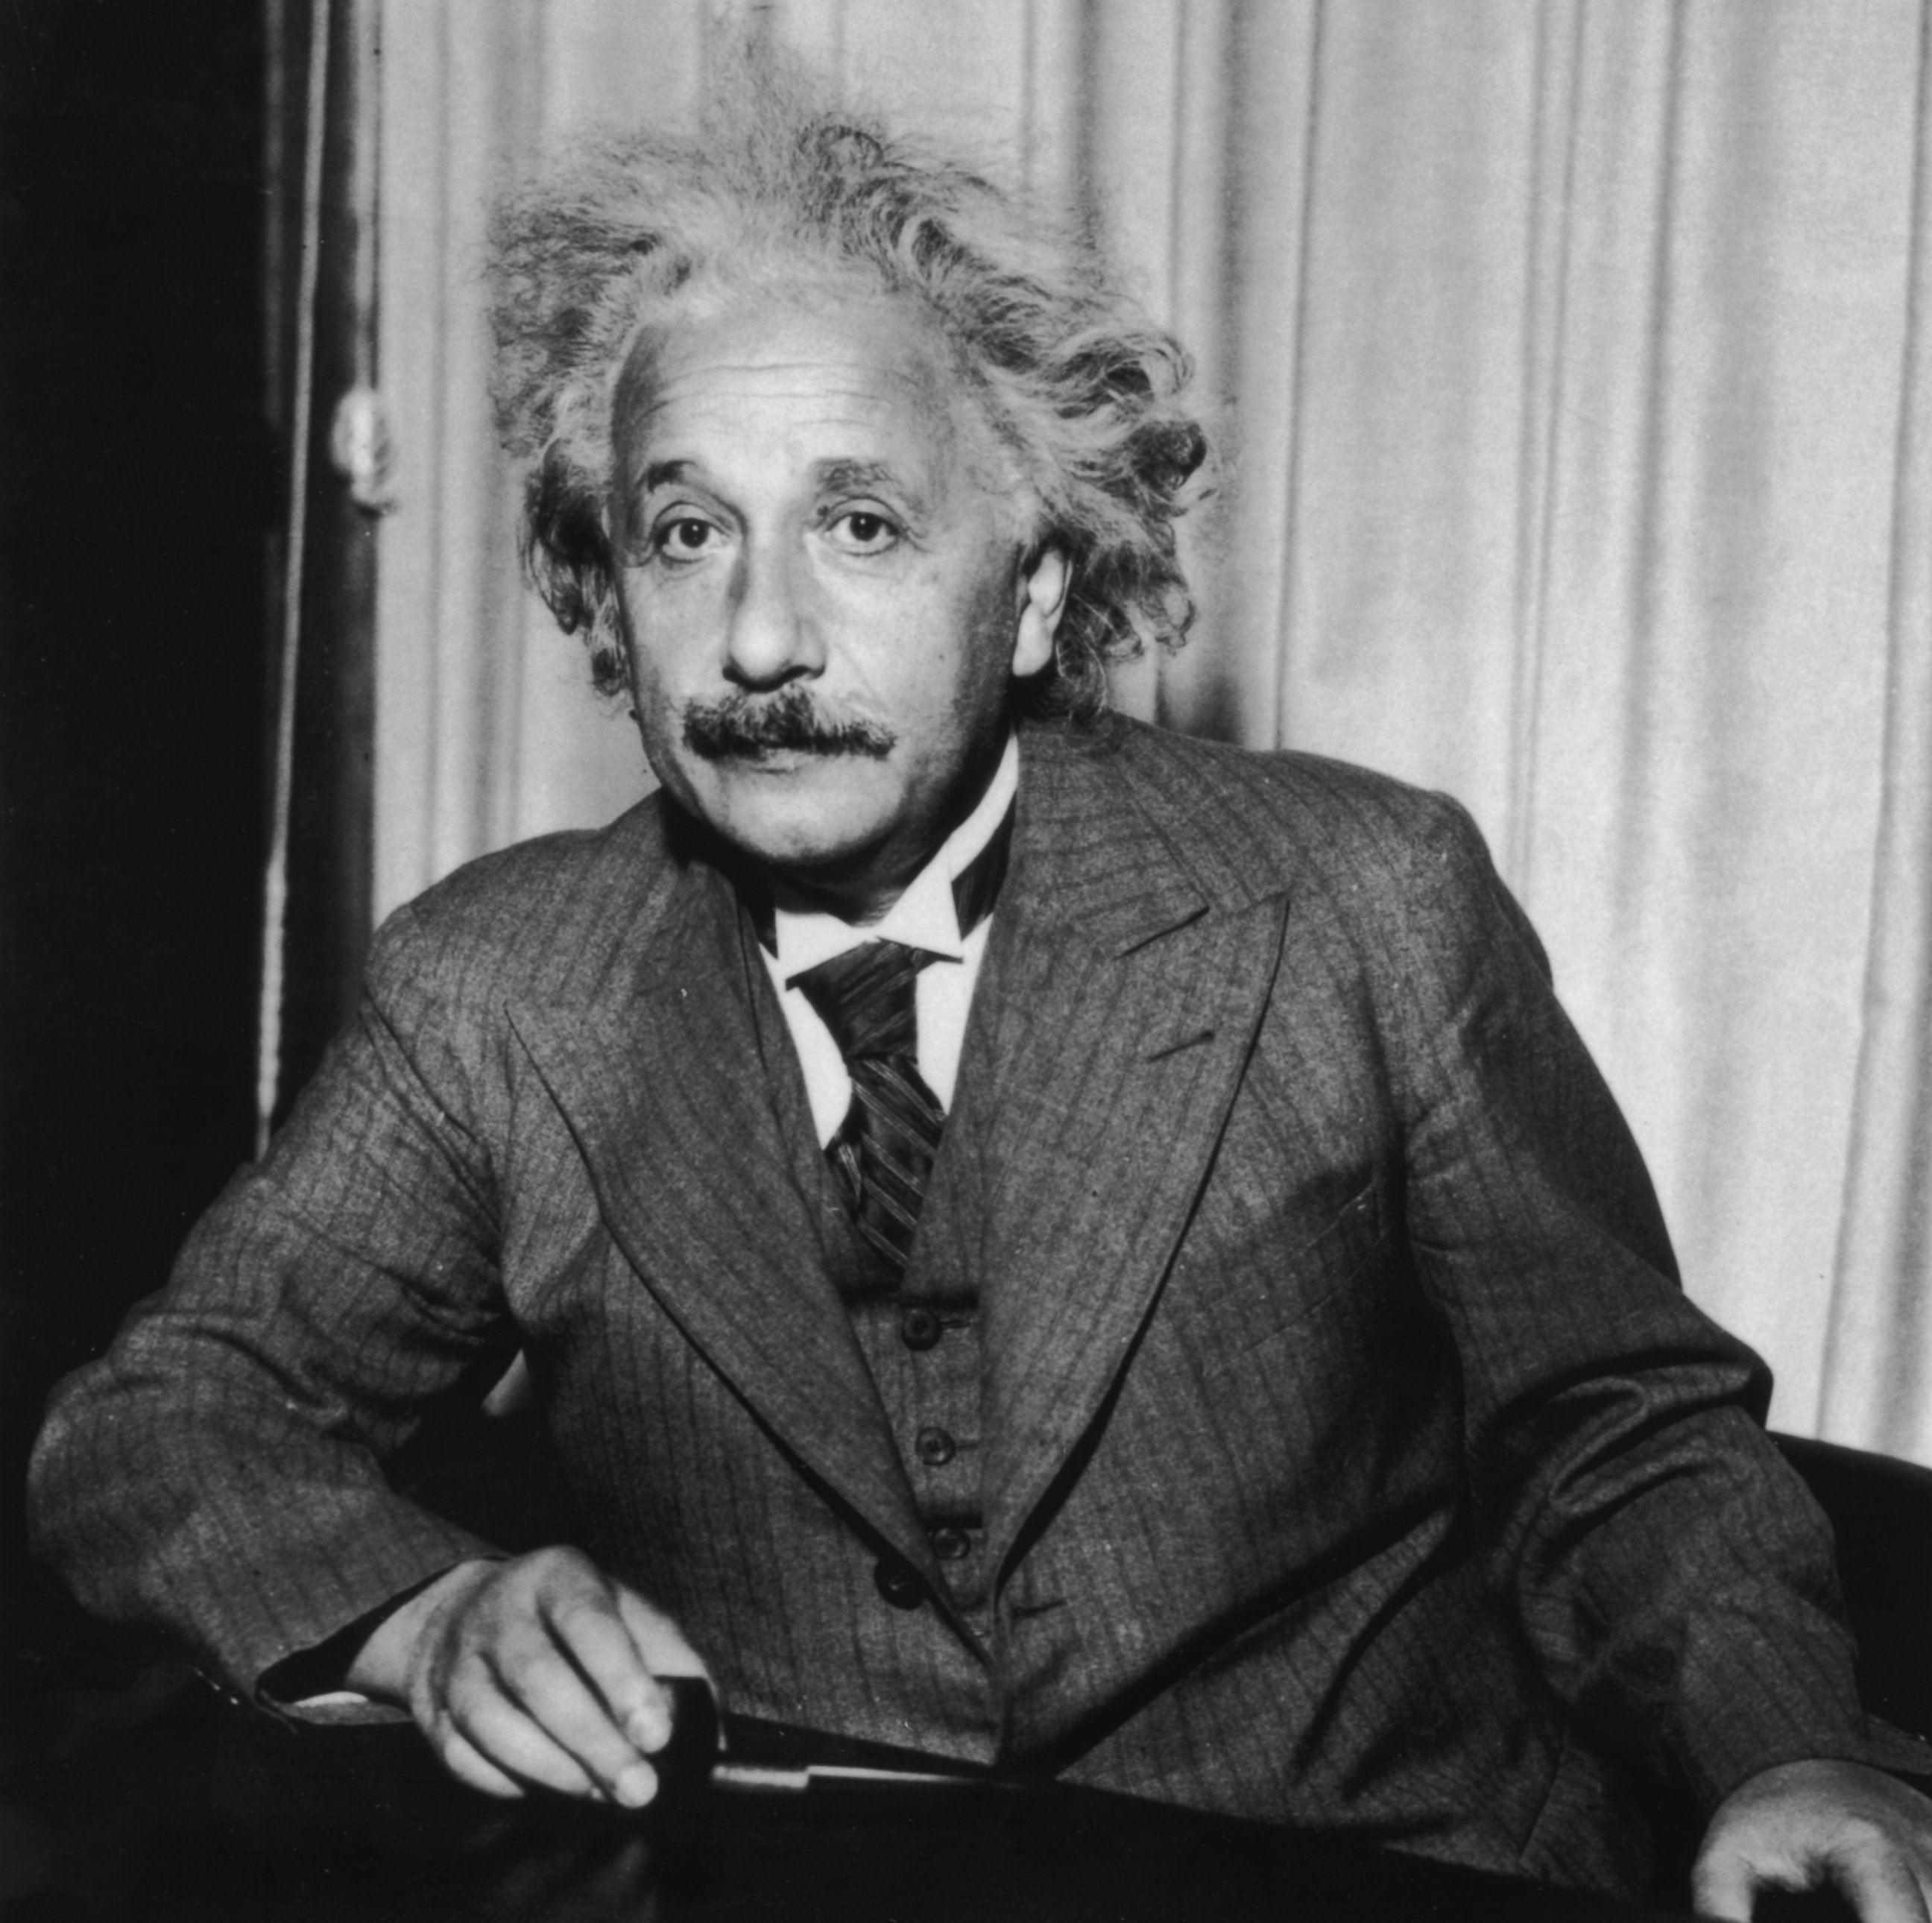 Albert Einstein Videos at ABC News Video Archive at abcnews.com